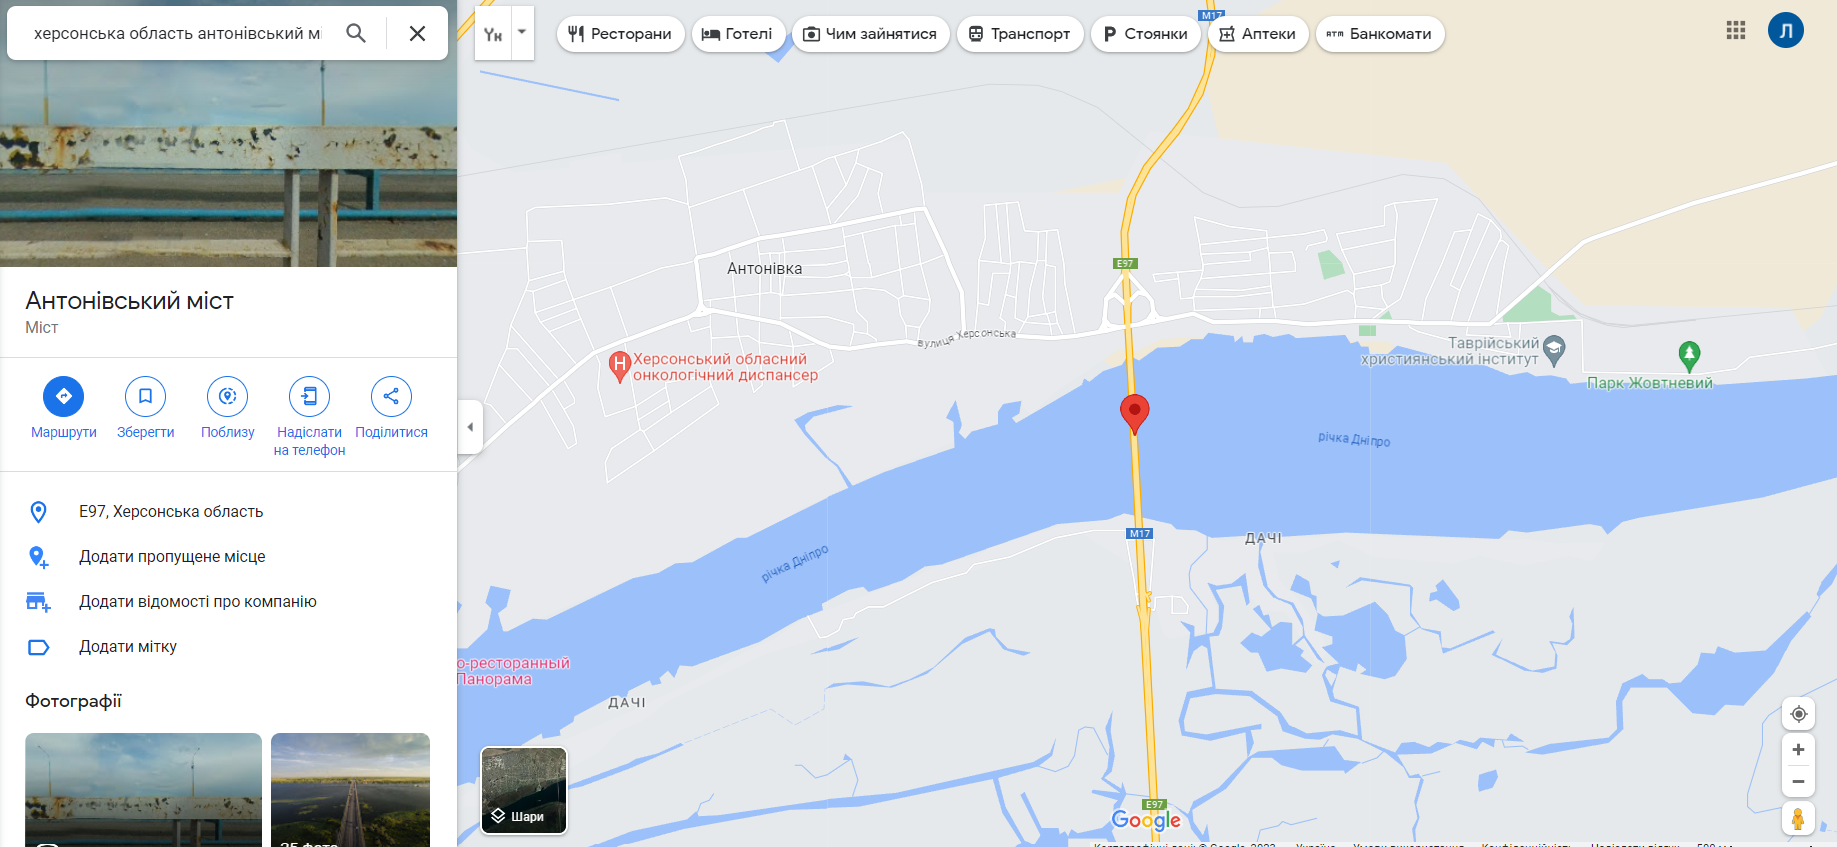 Оккупанты ударили "Искандером" по Антоновскому мосту на левом берегу Днепра. Видео